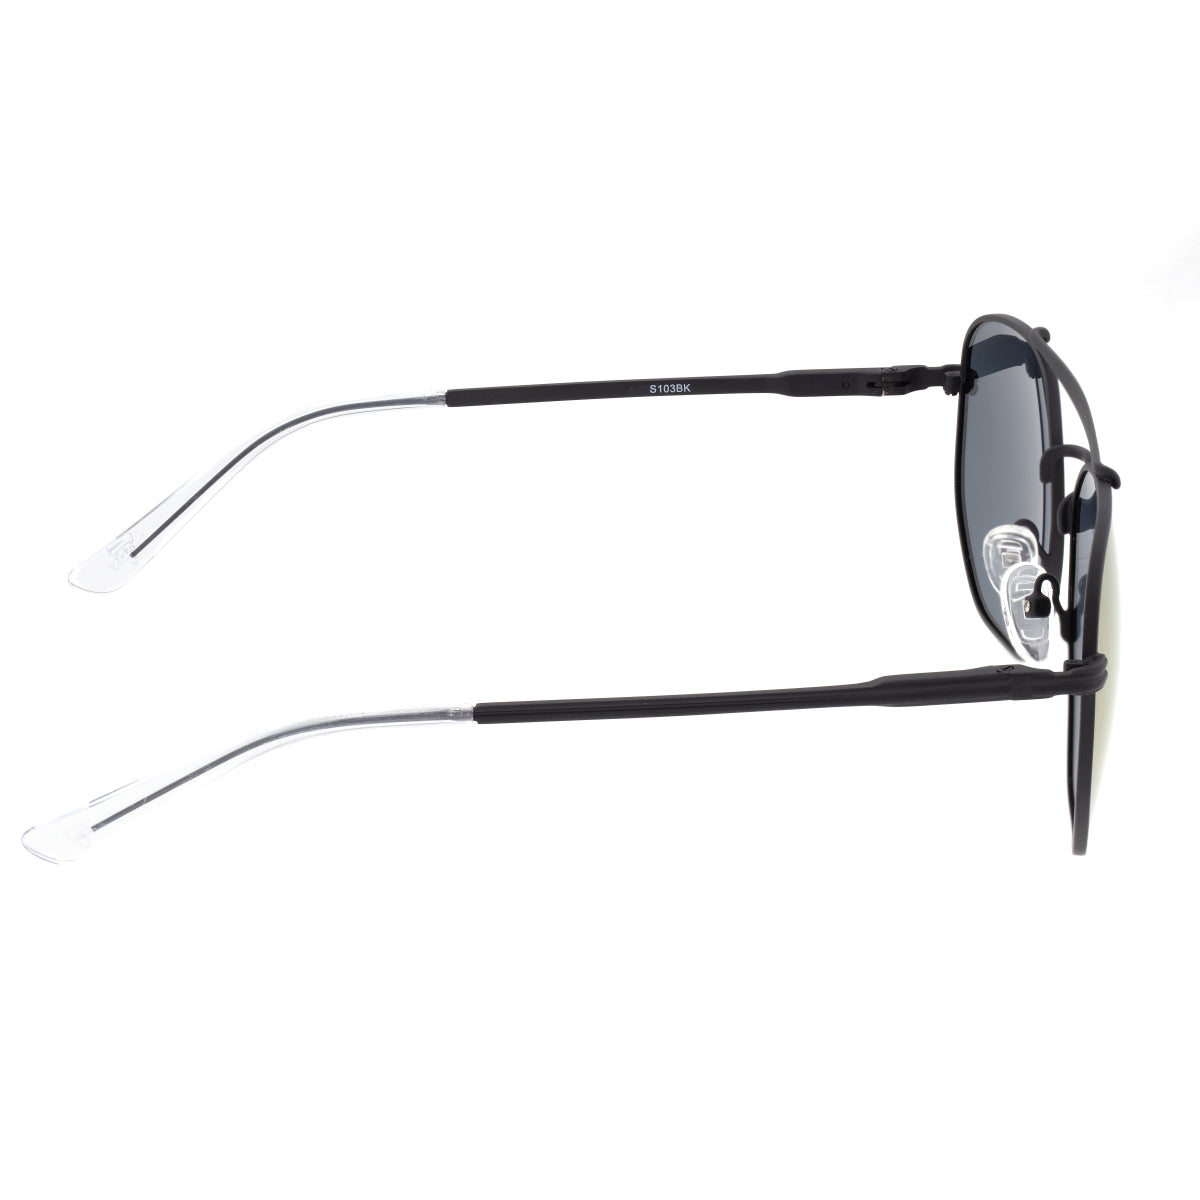 Sixty One Stockton Polarized Sunglasses - Black/Gold - SIXS103BK